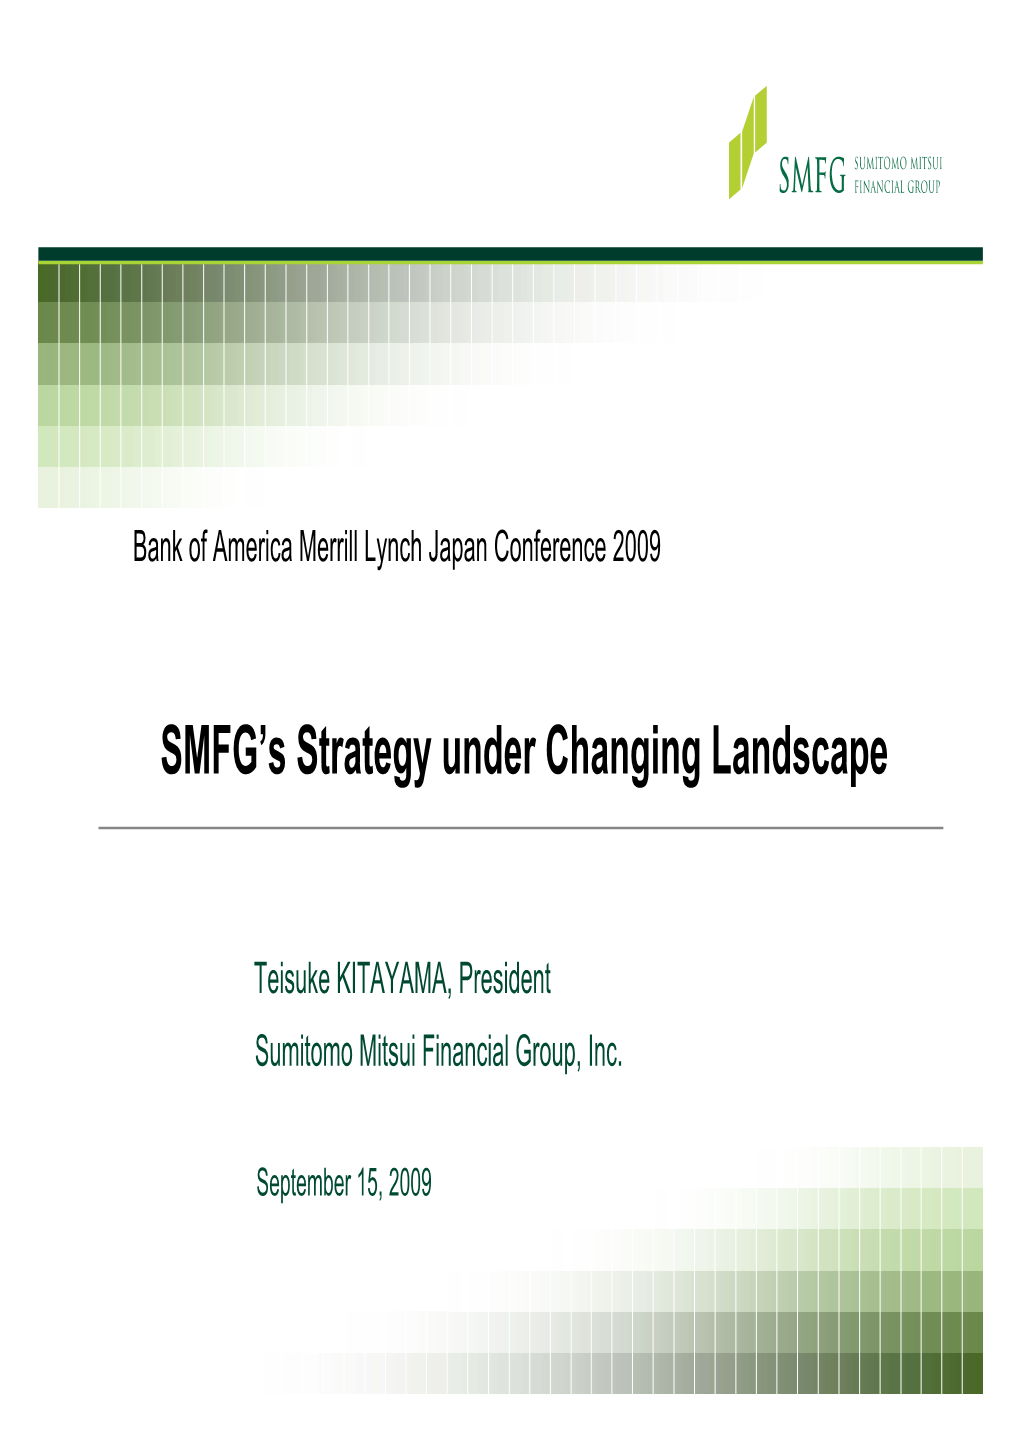 SMFG's Strategy Under Changing Landscape